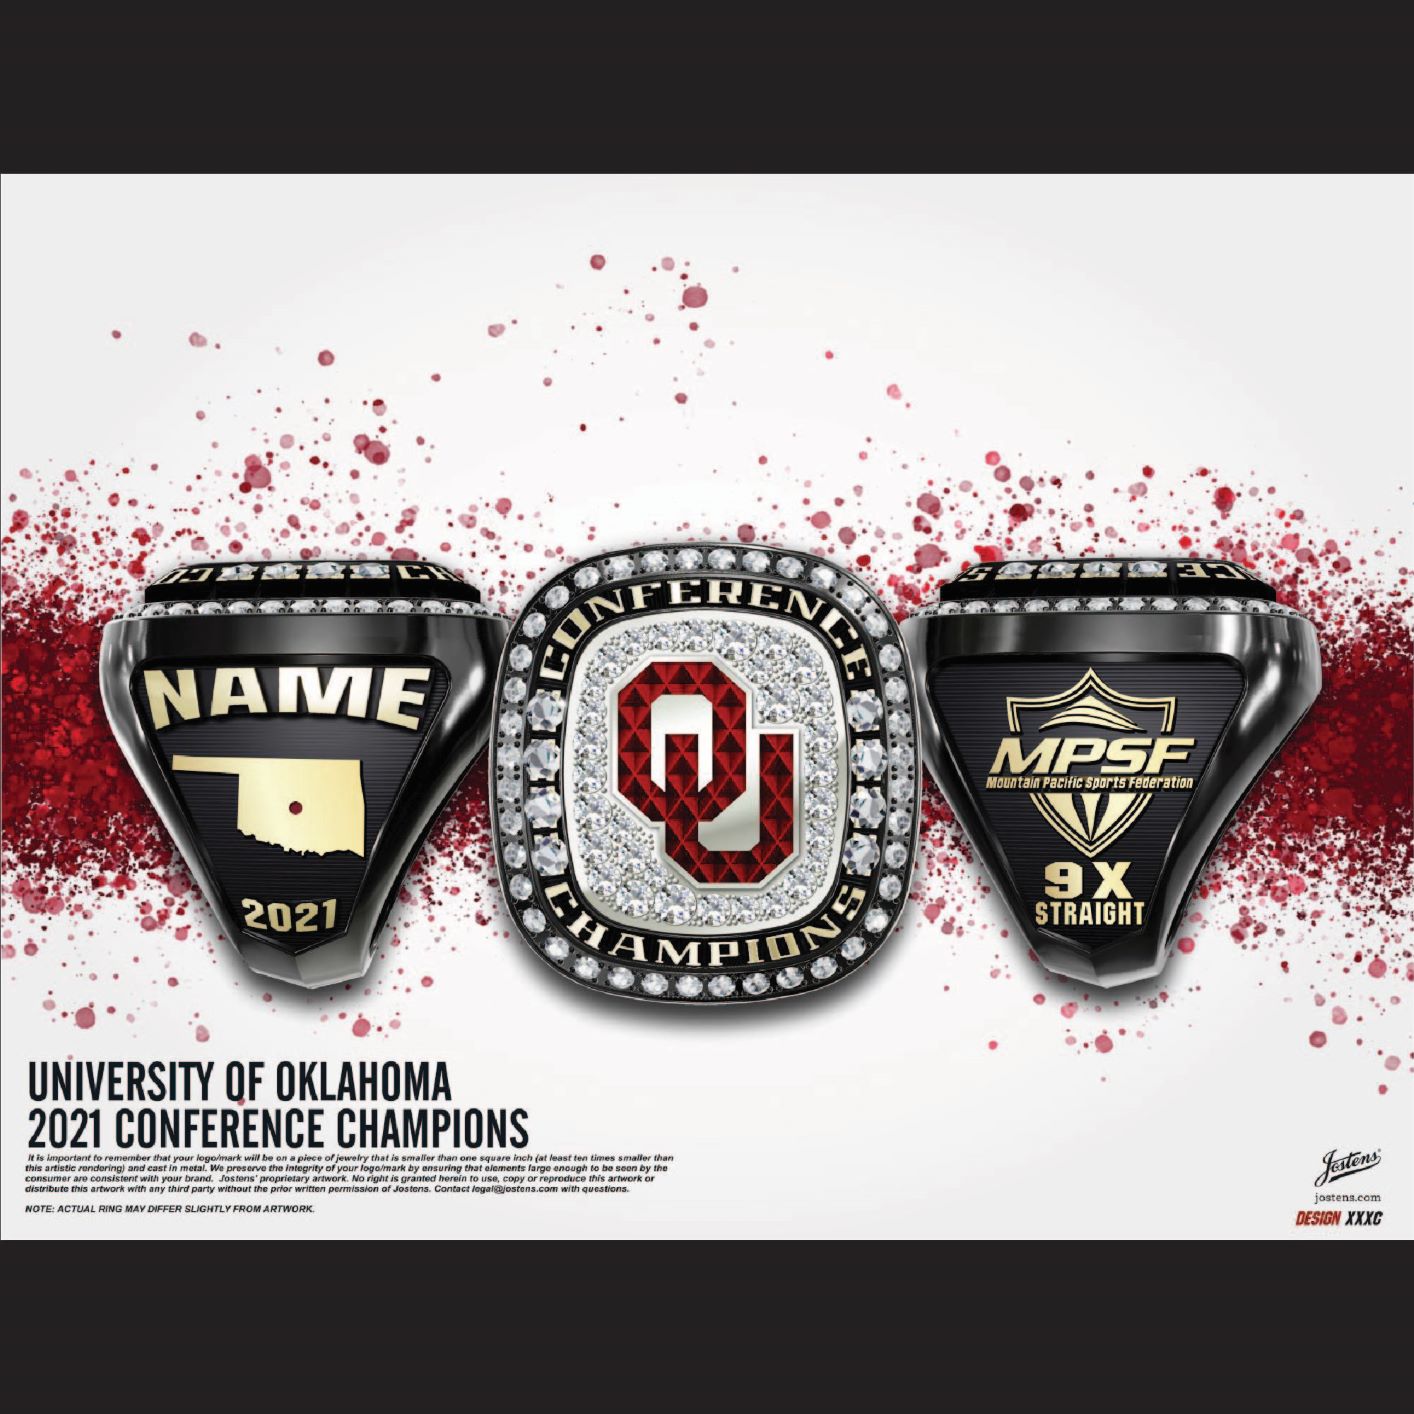 University of Oklahoma Men's Gymnastics 2021 Conference Championship Ring